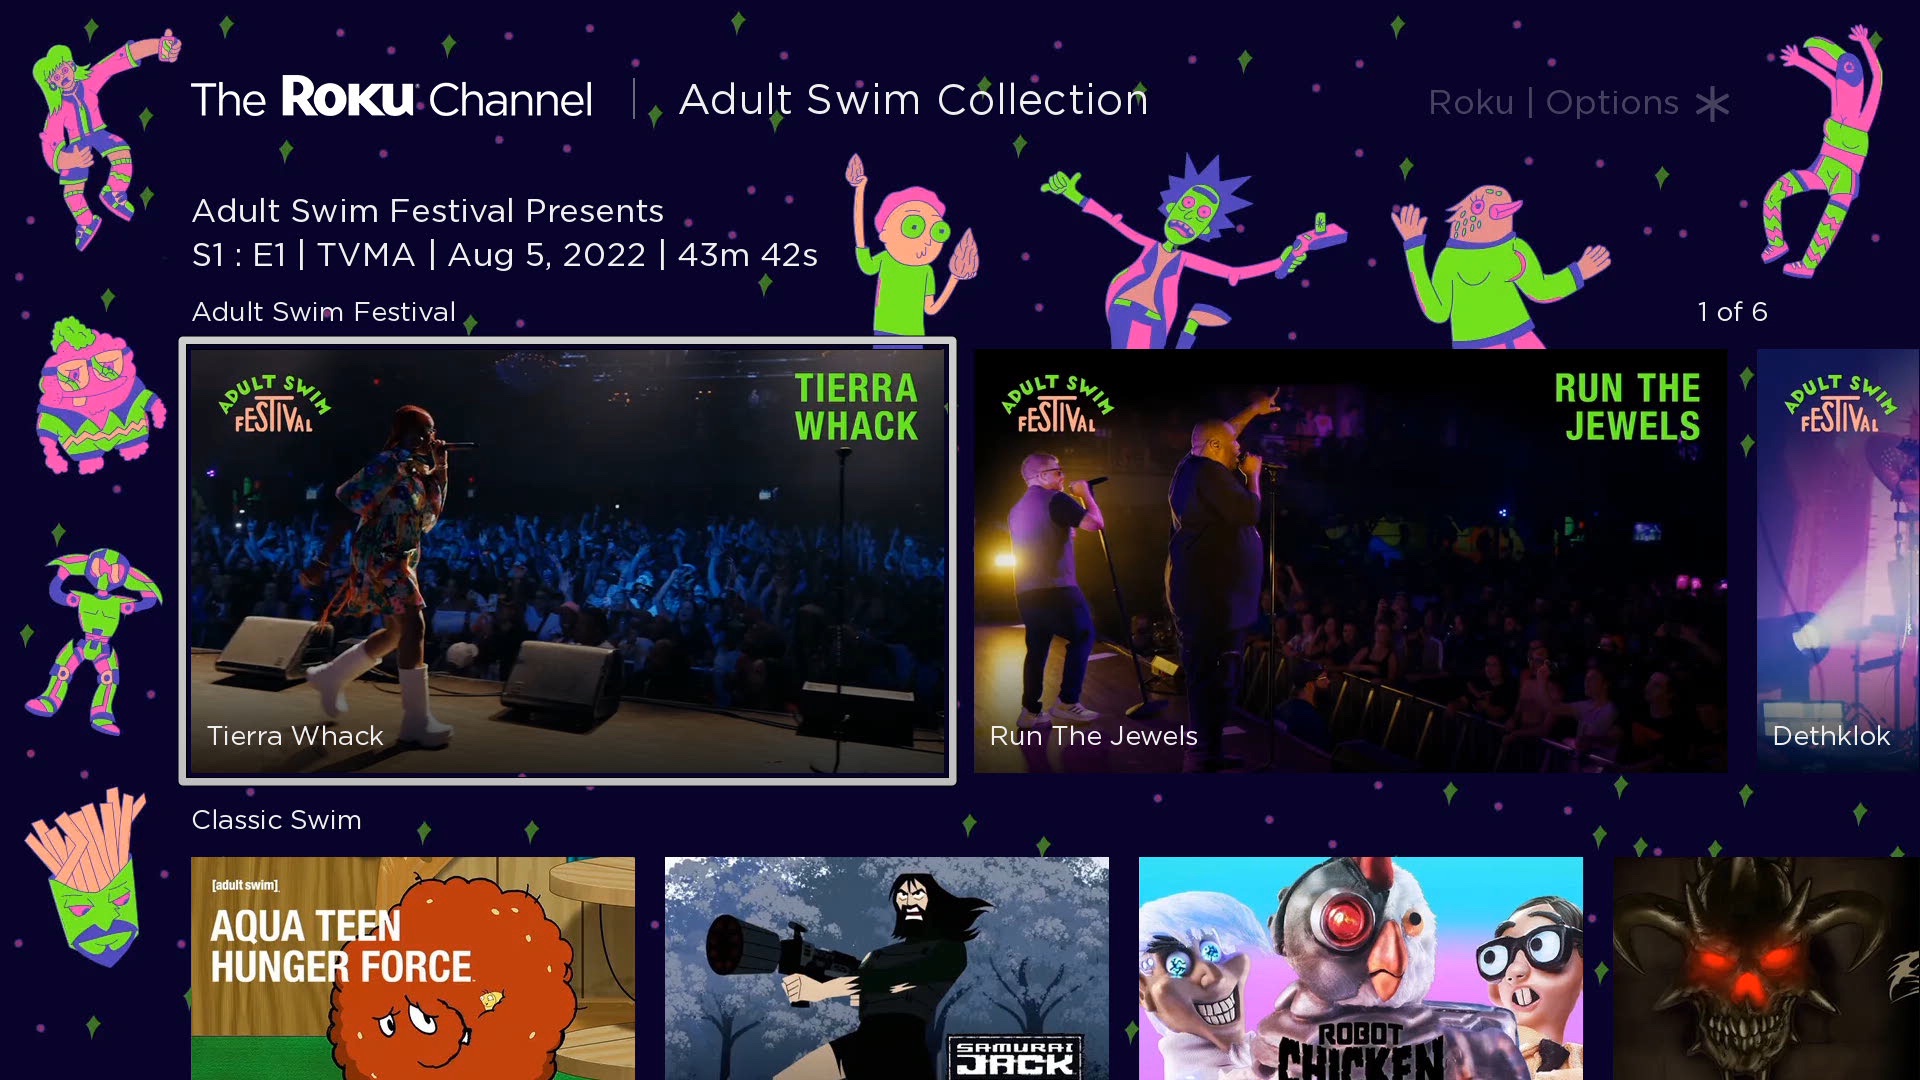 The Roku Channel Will Stream the Adult Swim Festival & Add 120 Adult Swim Episodes